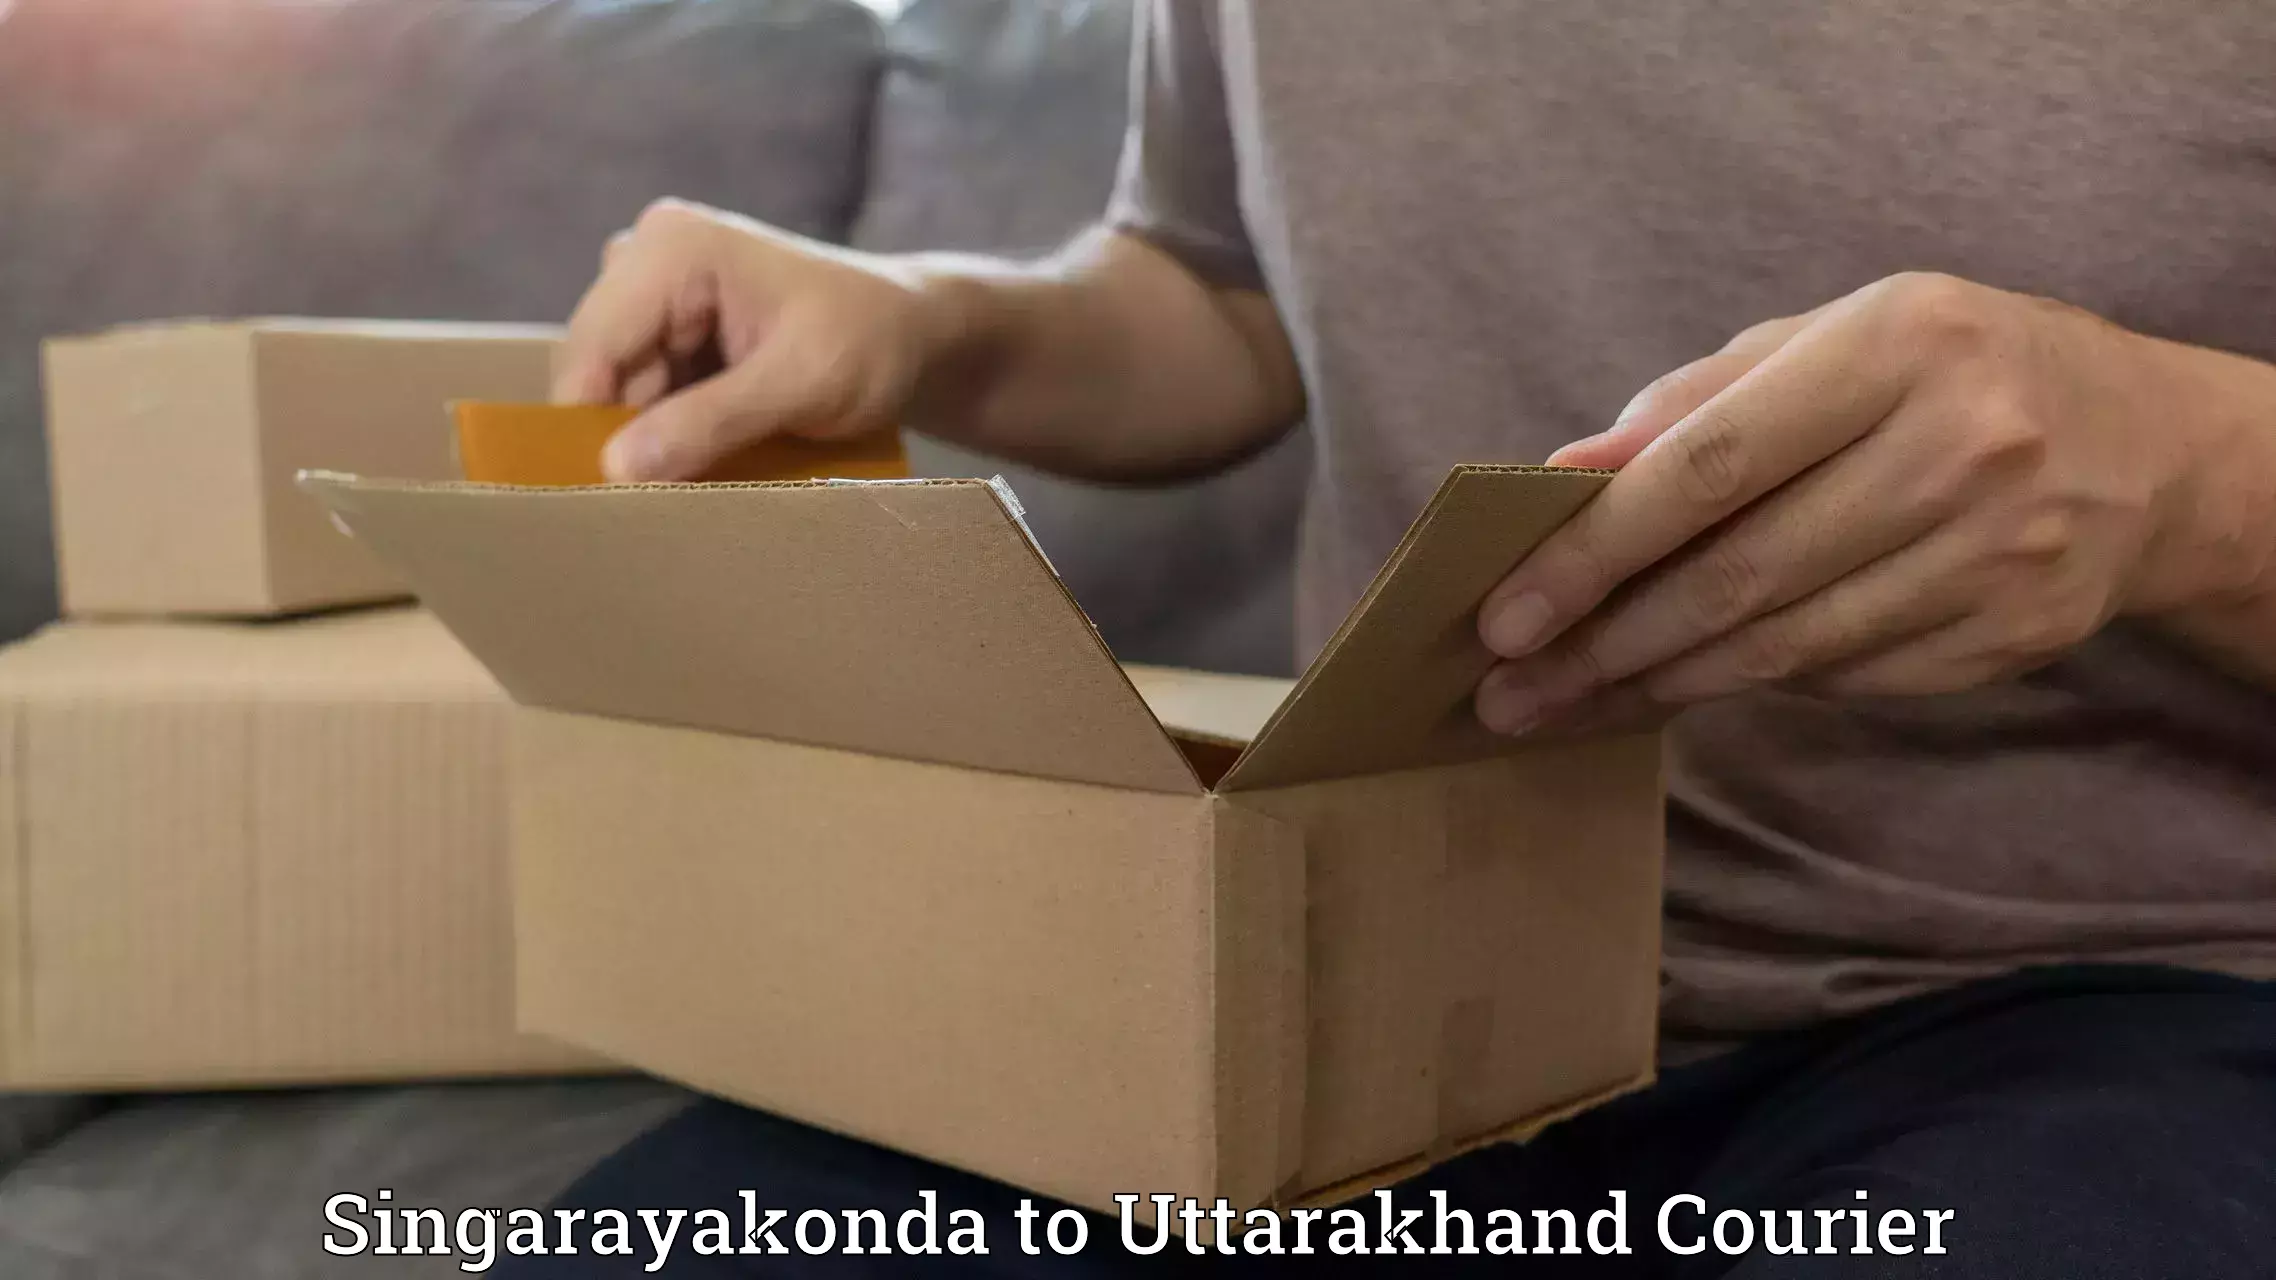 Fast delivery service Singarayakonda to Paithani